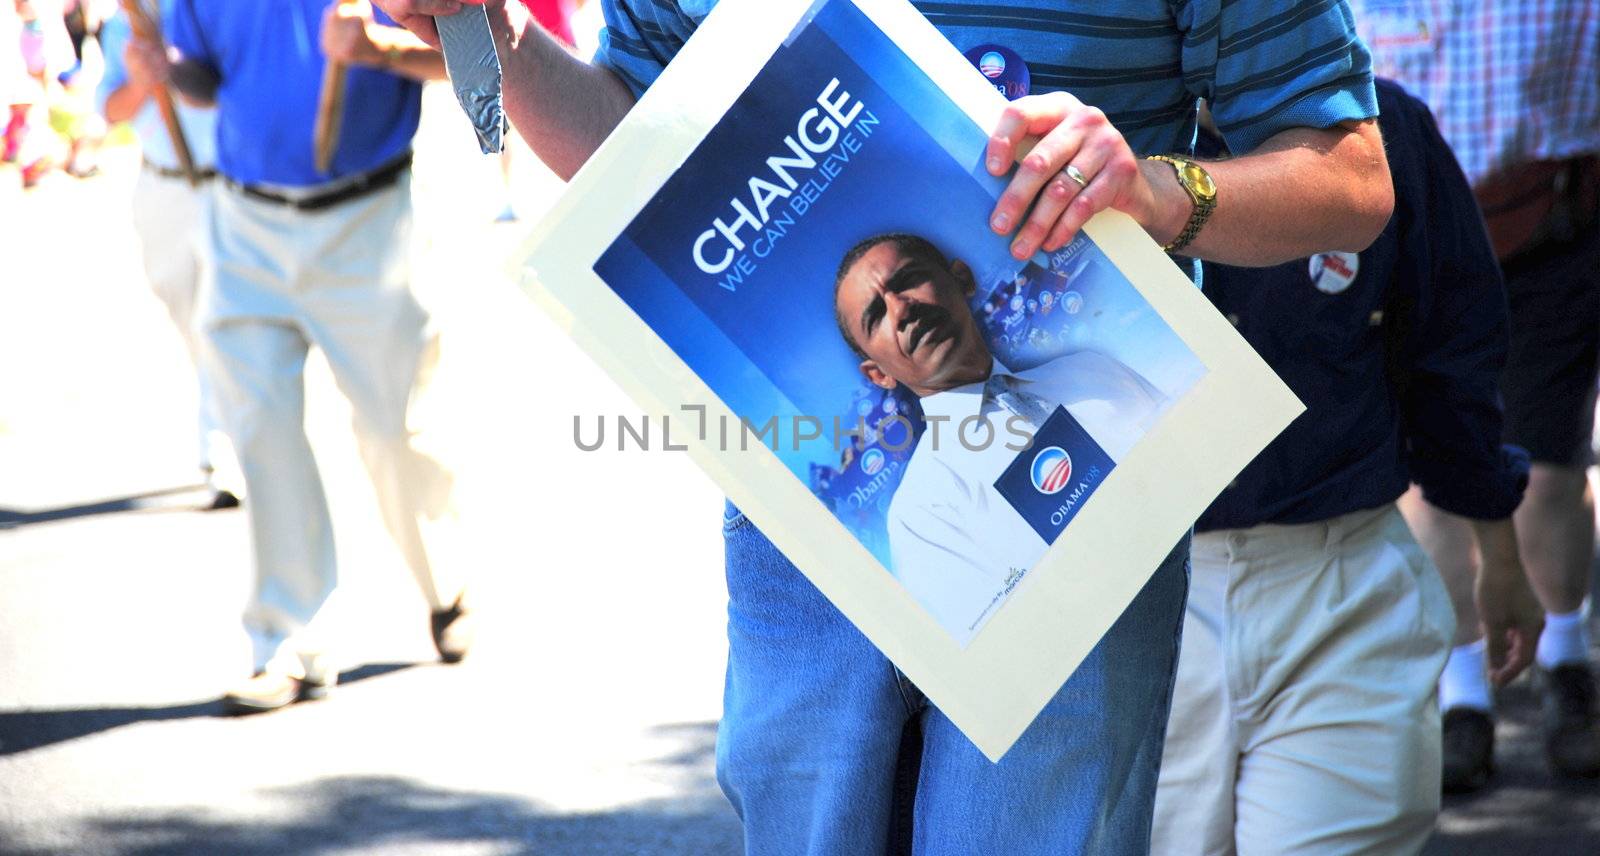 Barack Obama Campaign Sign by oscarcwilliams